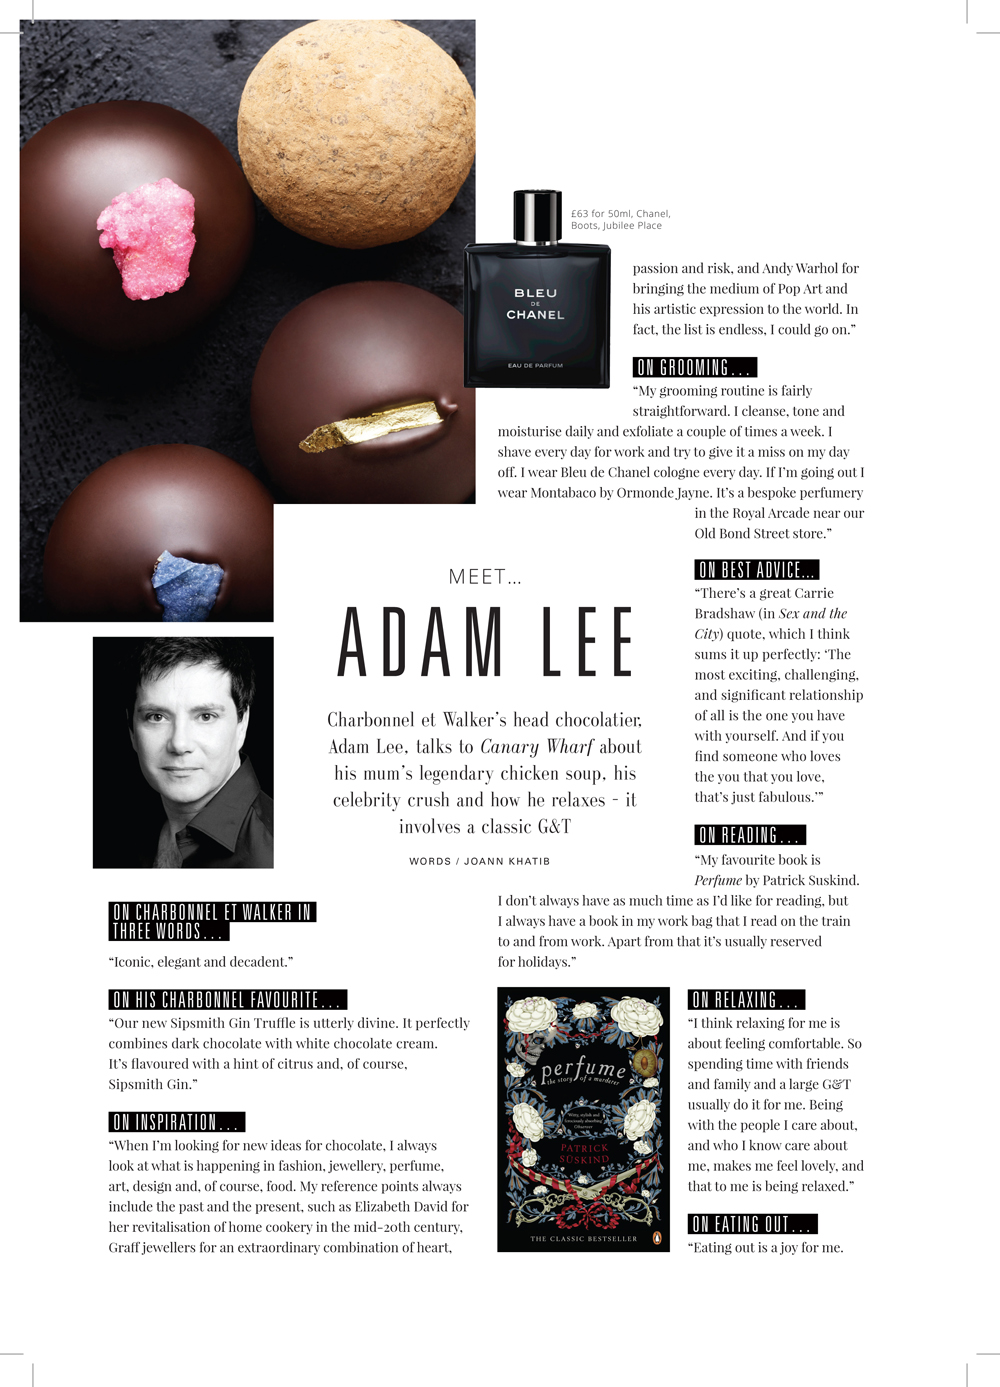 Adam Lee in Canary Wharf Magazine